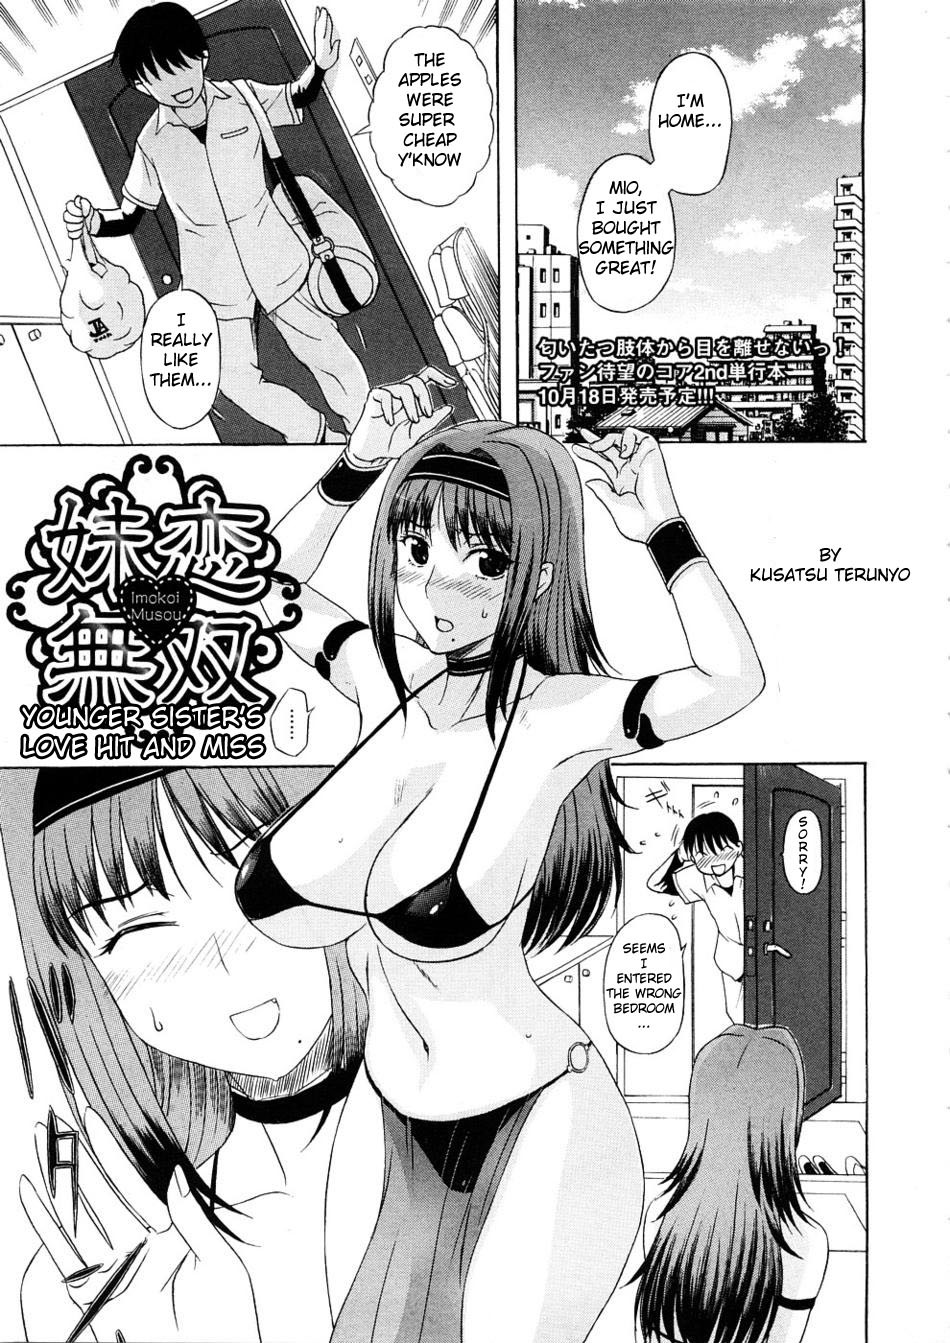 Imokoi Musou - Younger Sister's Love Hit and Miss hentai manga